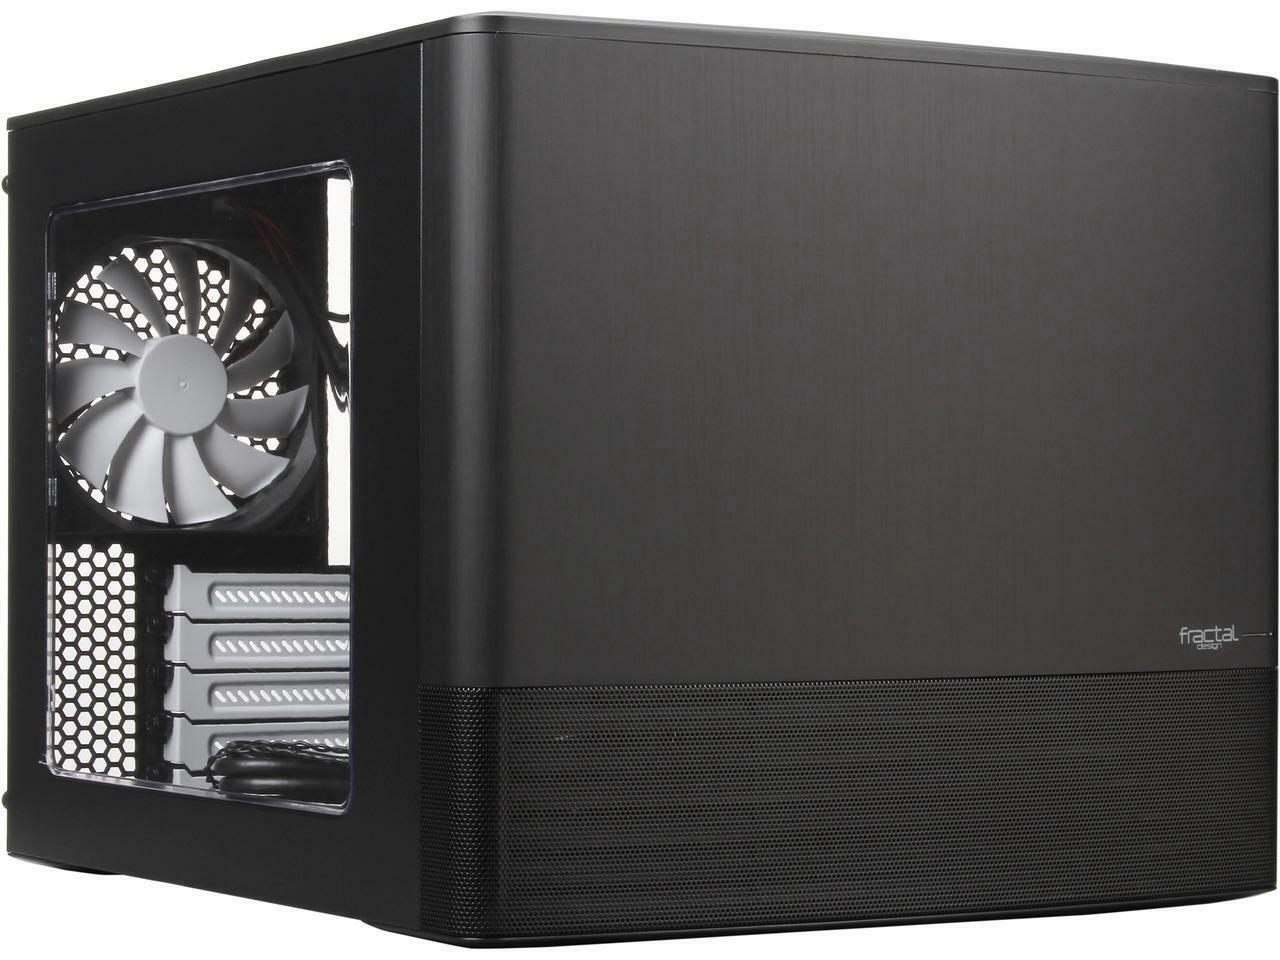 Fractal Design Node 804 Black Window Aluminum Steel Micro ATX Cube Computer Case